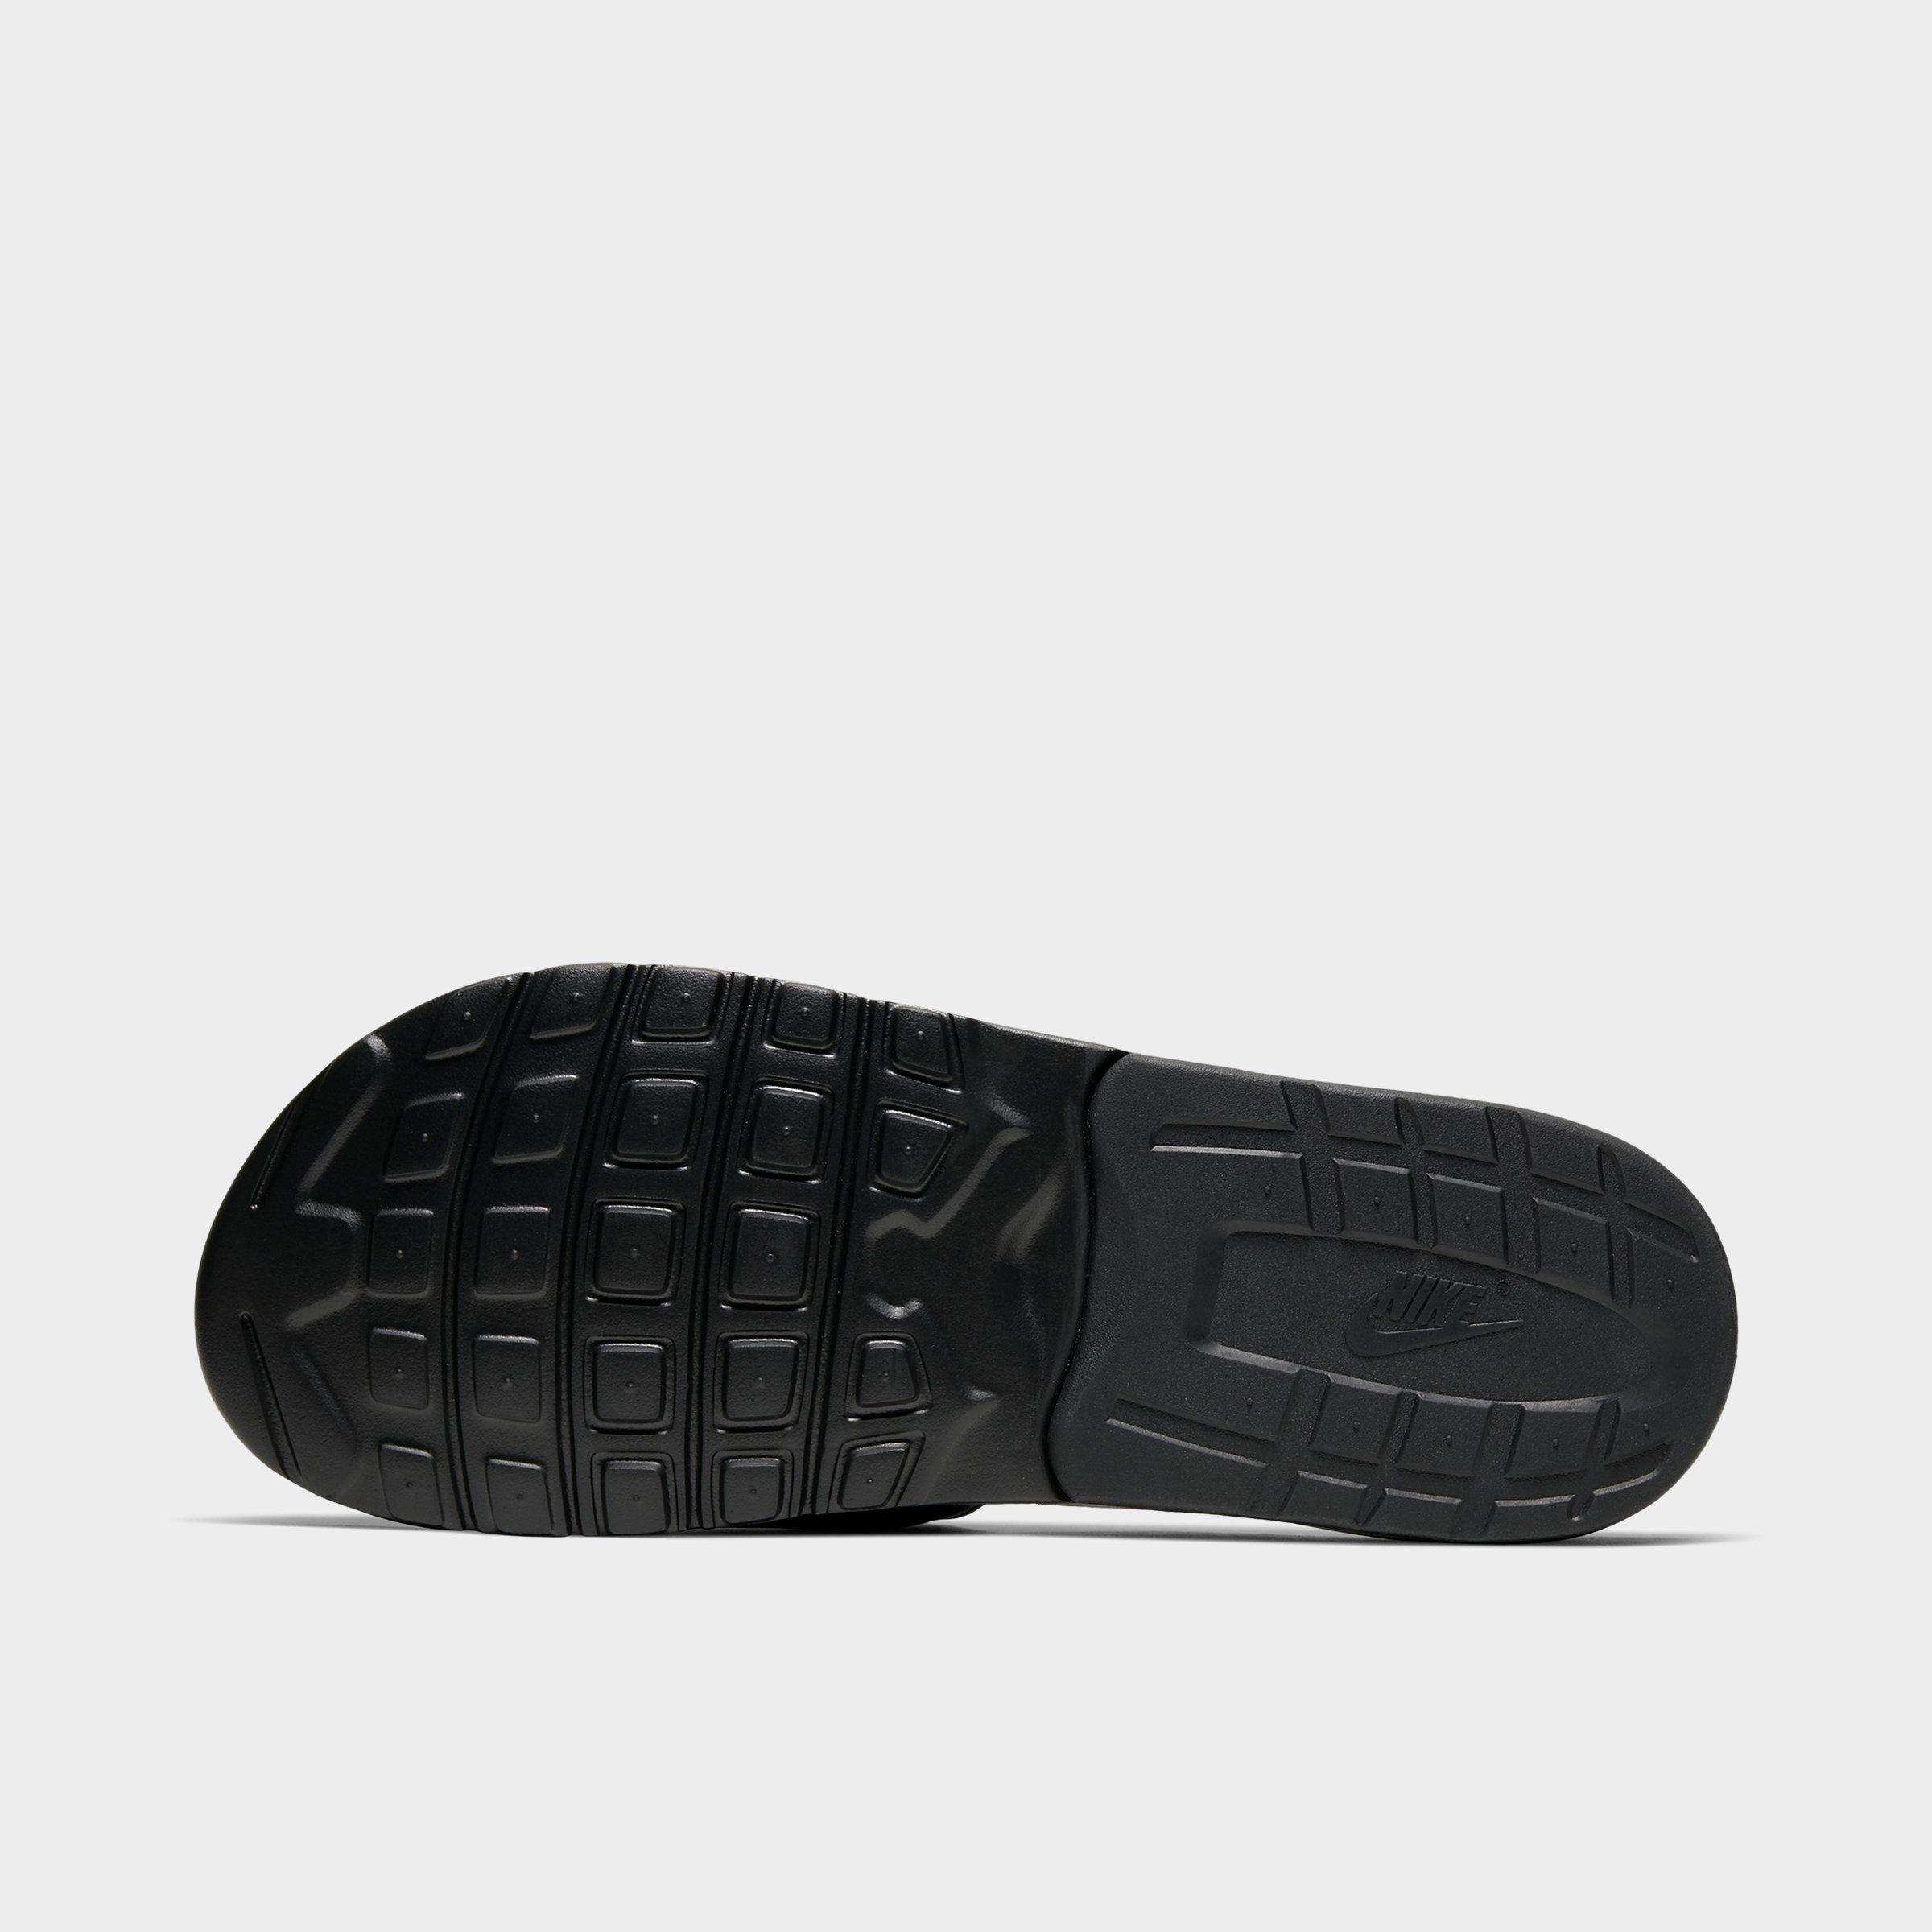 Men's Nike Air Max Camden Slide Sandals 